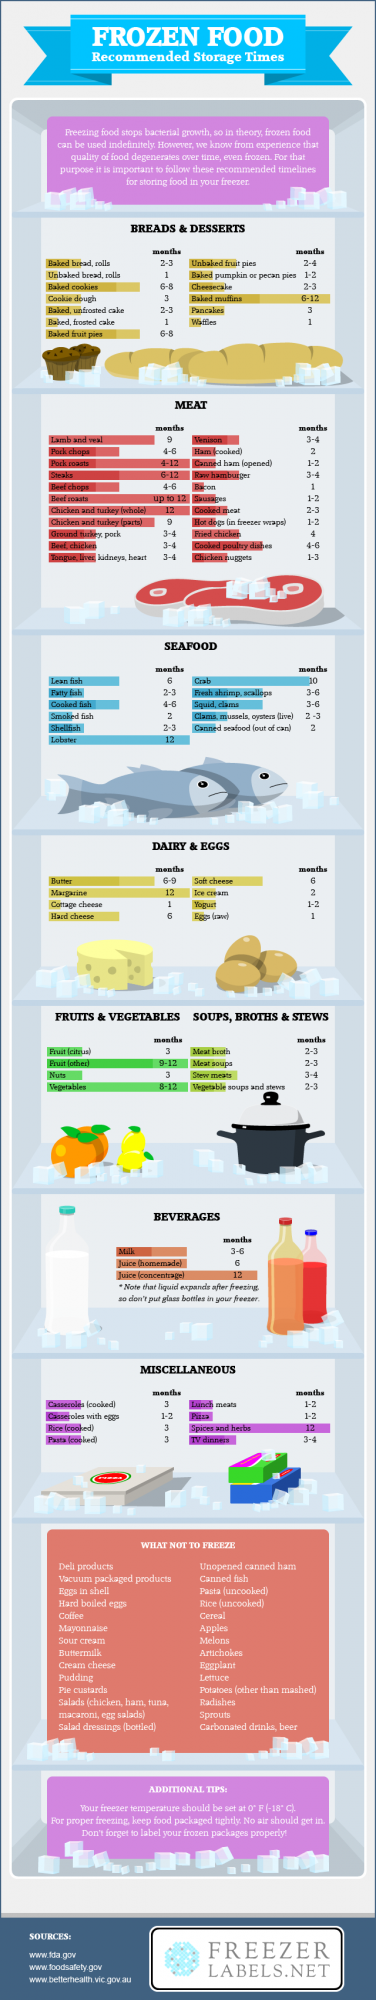 Foods you can freeze | Freezer Storage | Freezer Organization | Homemaking | Organizing the Freezer